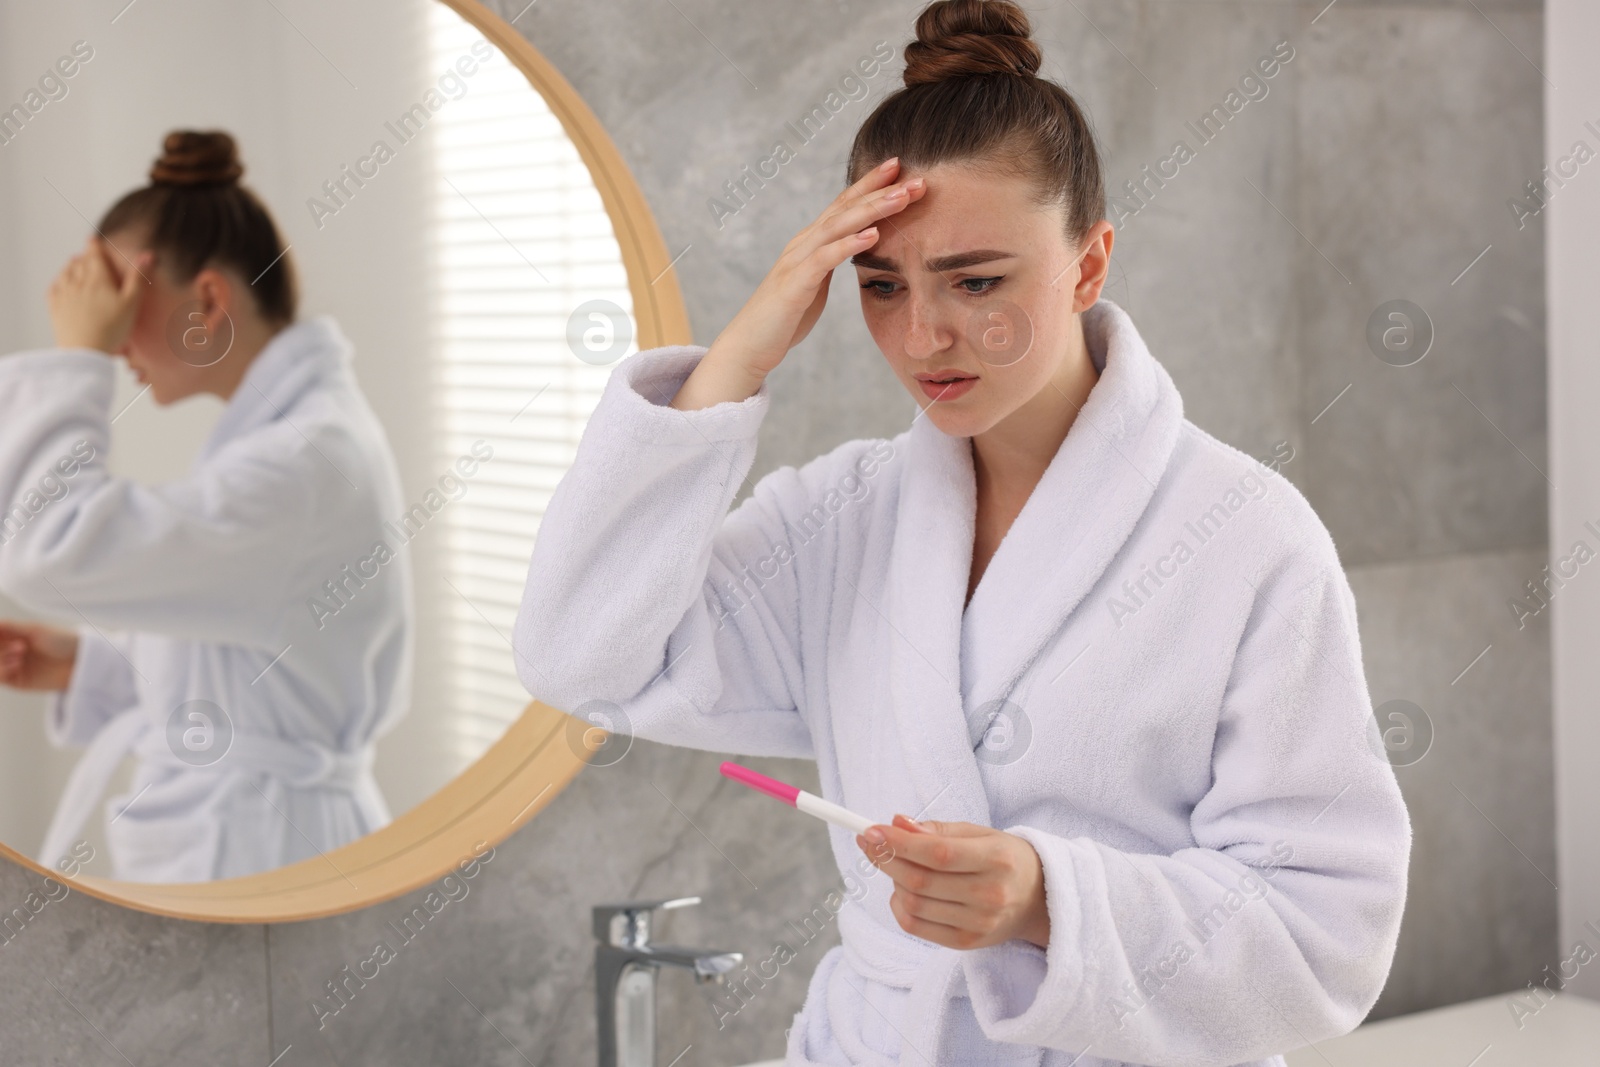 Photo of Sad woman holding pregnancy test in bathroom